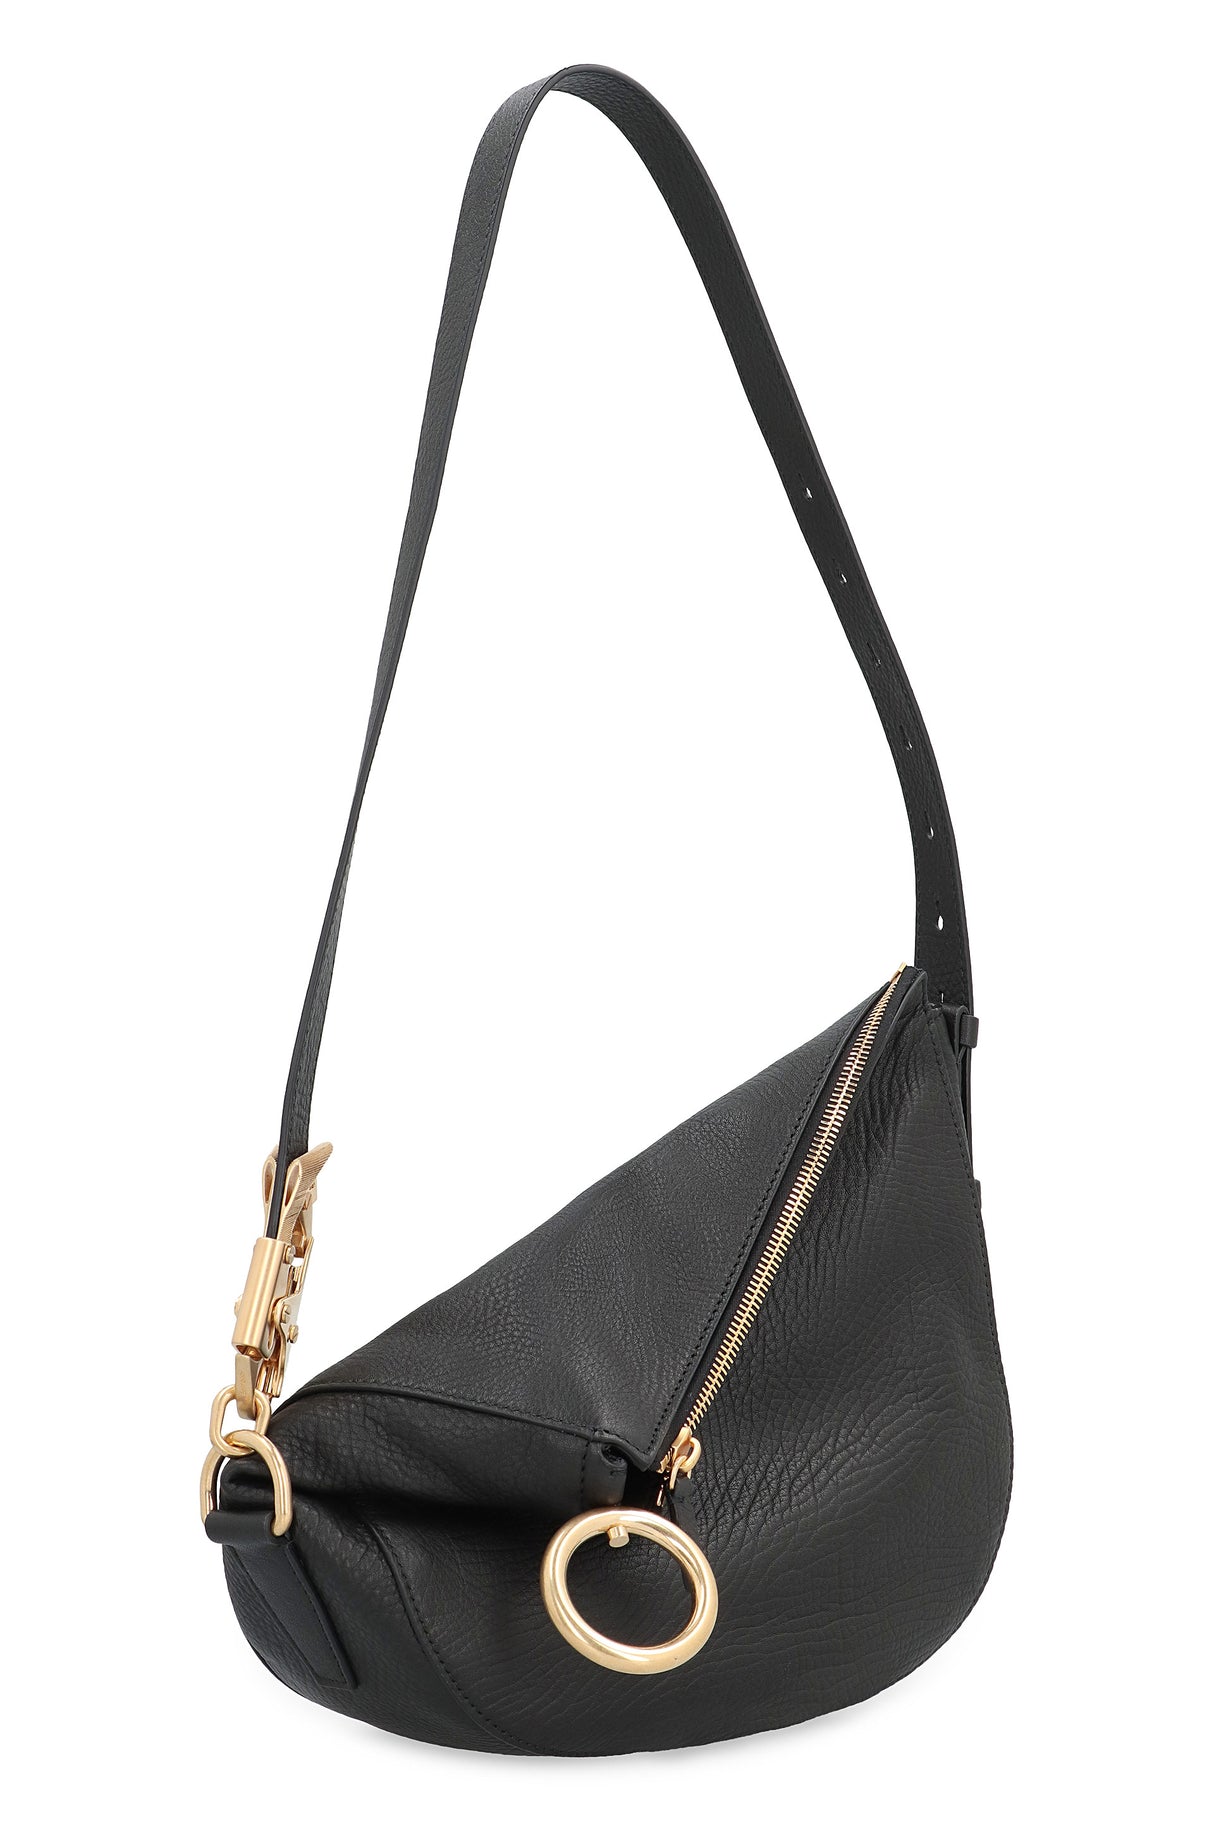 BURBERRY Sophisticated Black Leather Shoulder Handbag for Women - FW23